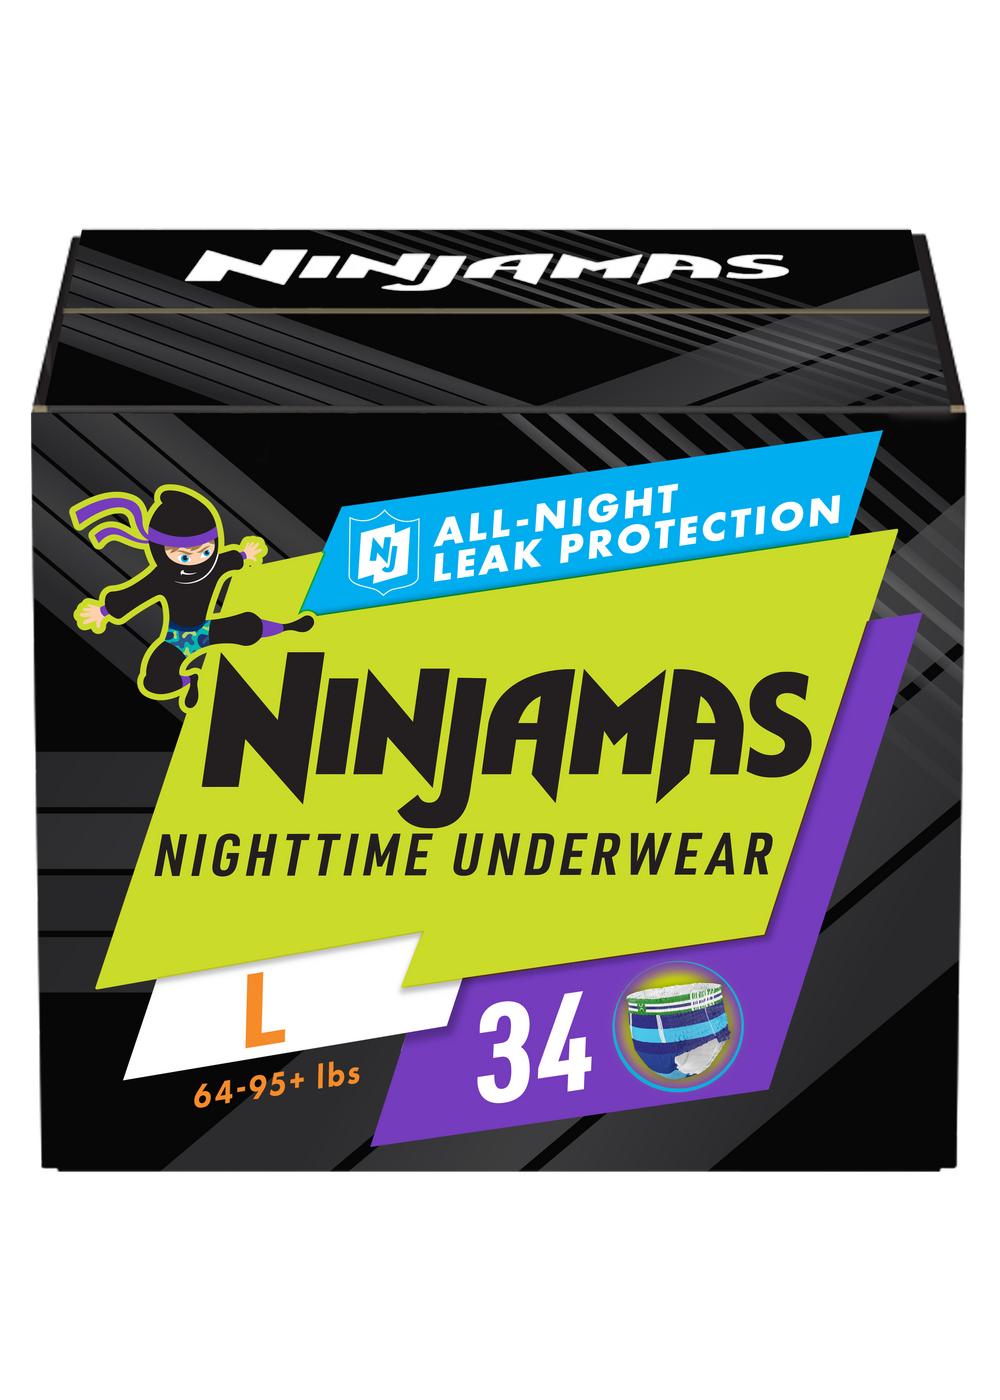 Goodnites Girls' Nighttime Bedwetting Underwear XL (95-140 lb.) - Shop  Training Pants at H-E-B